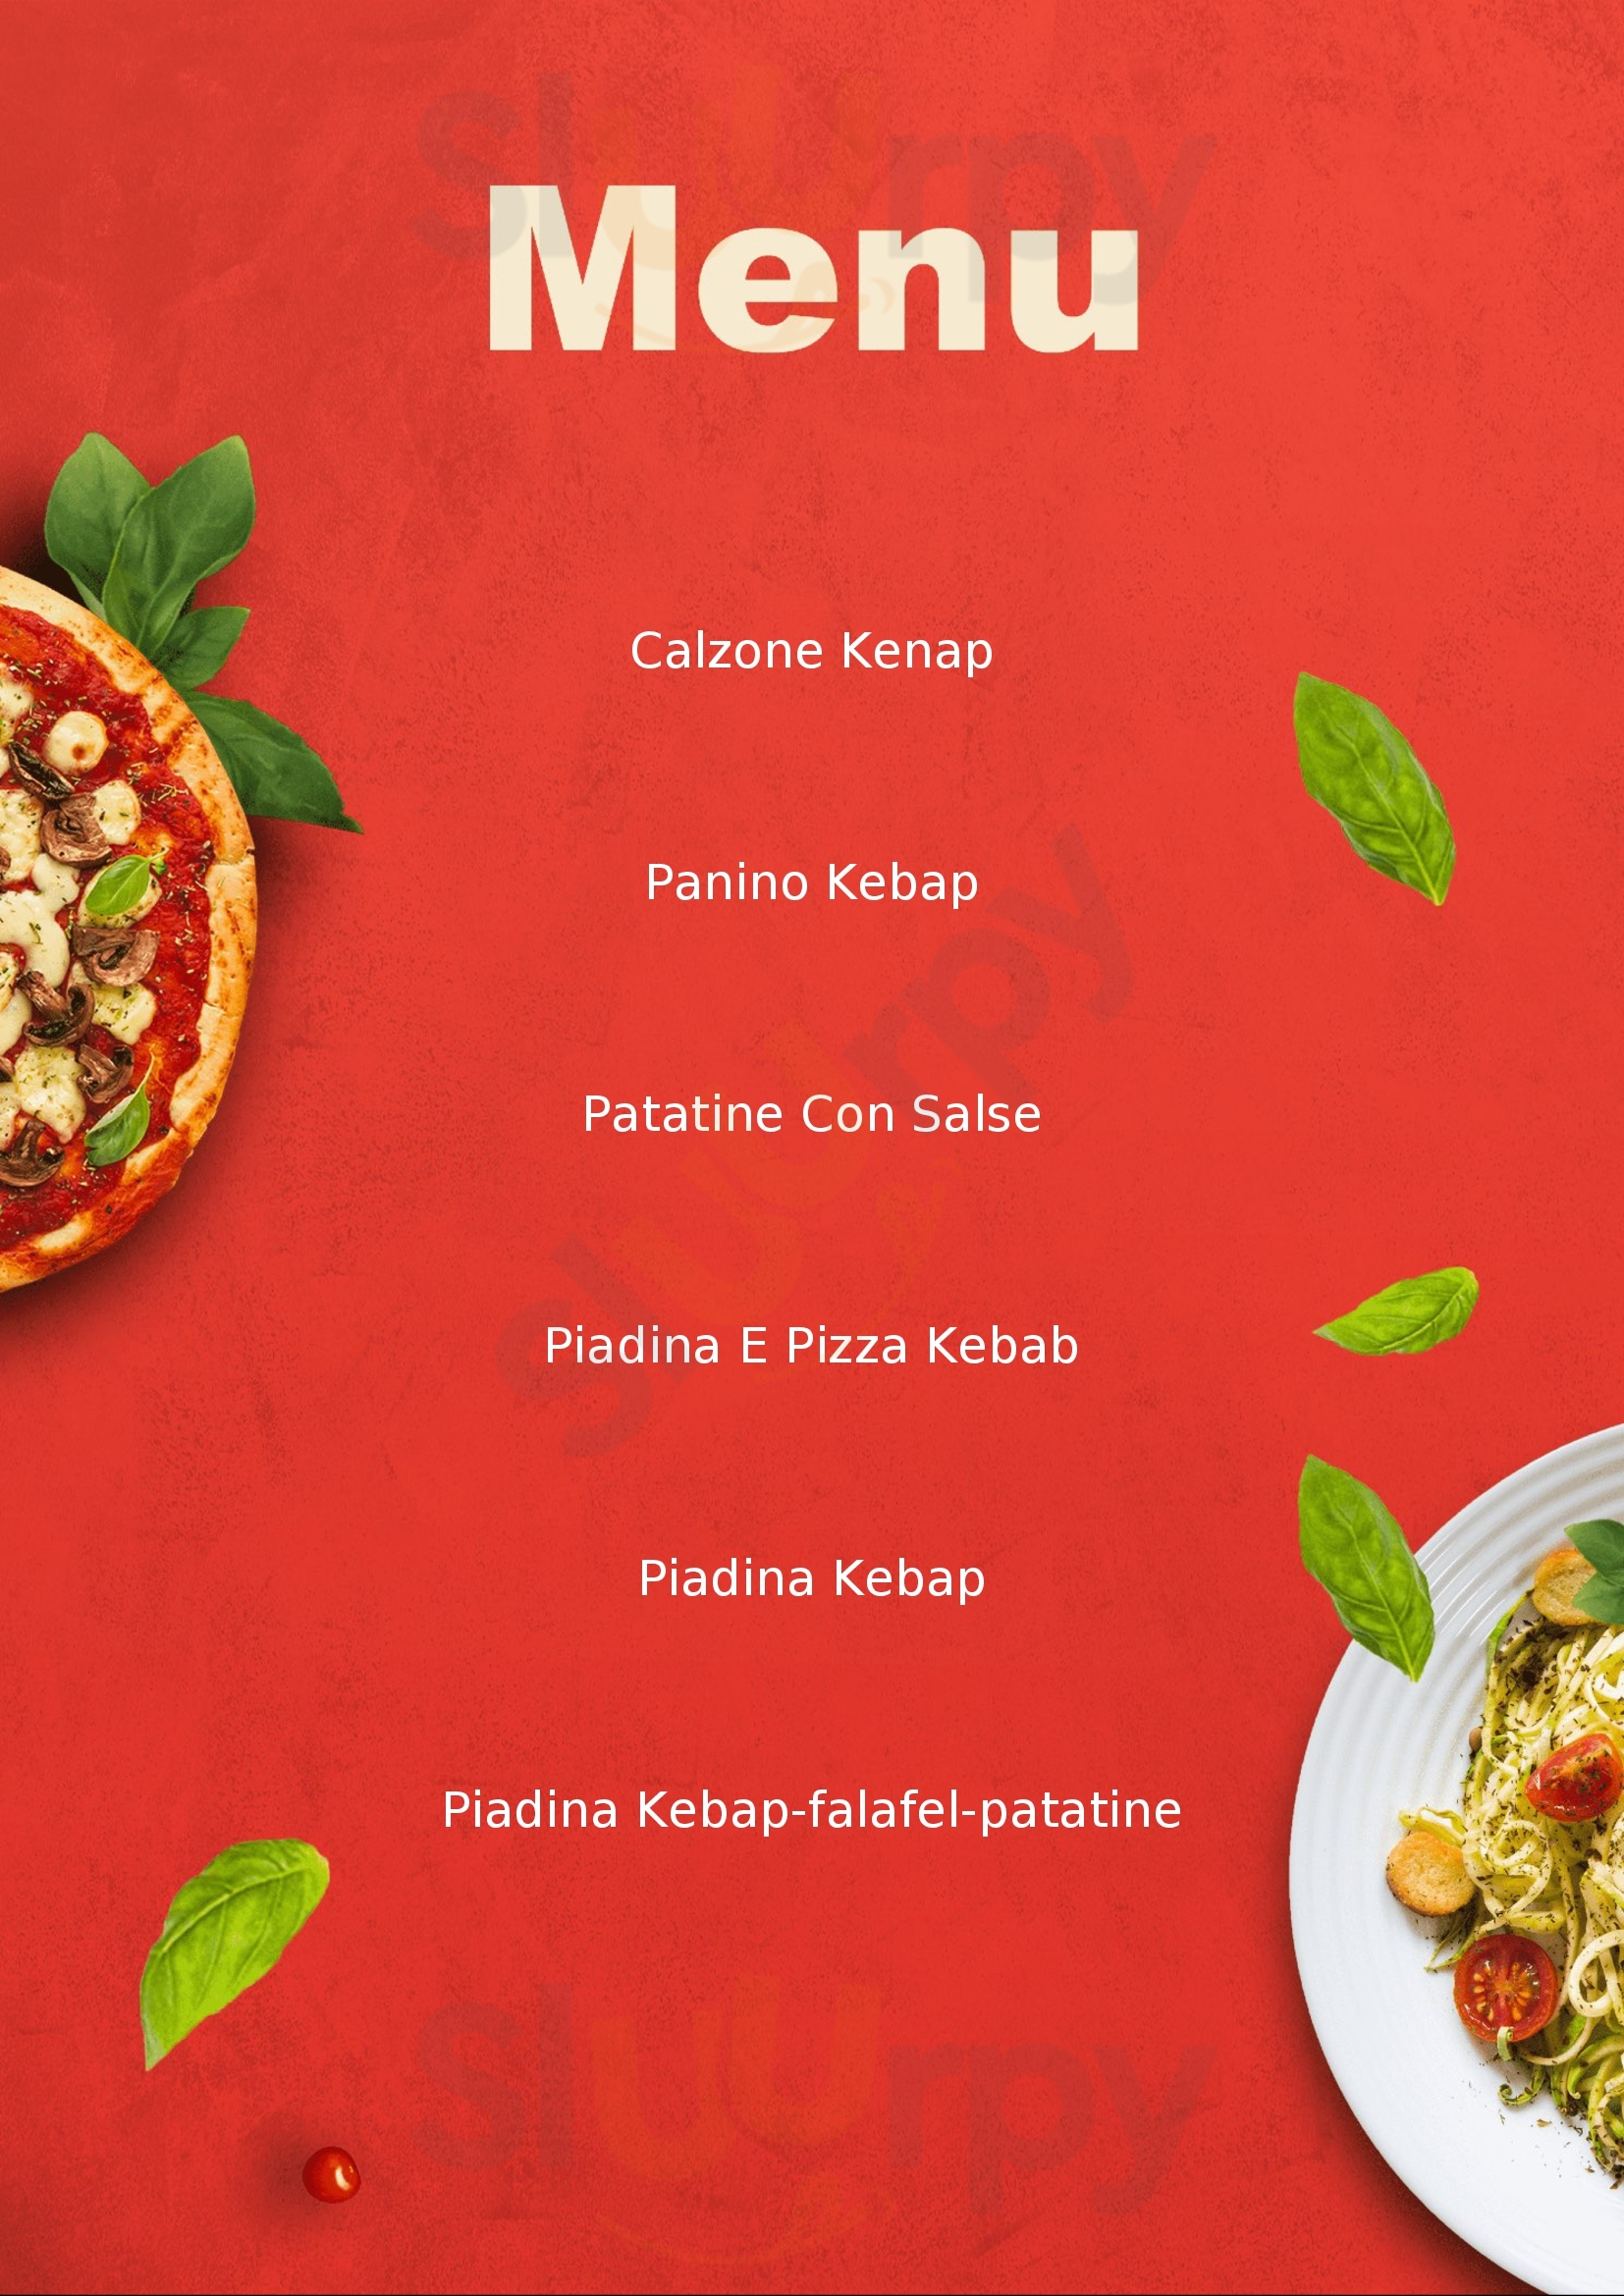 Star Pizzeria E Kebap Cassano d'Adda menù 1 pagina